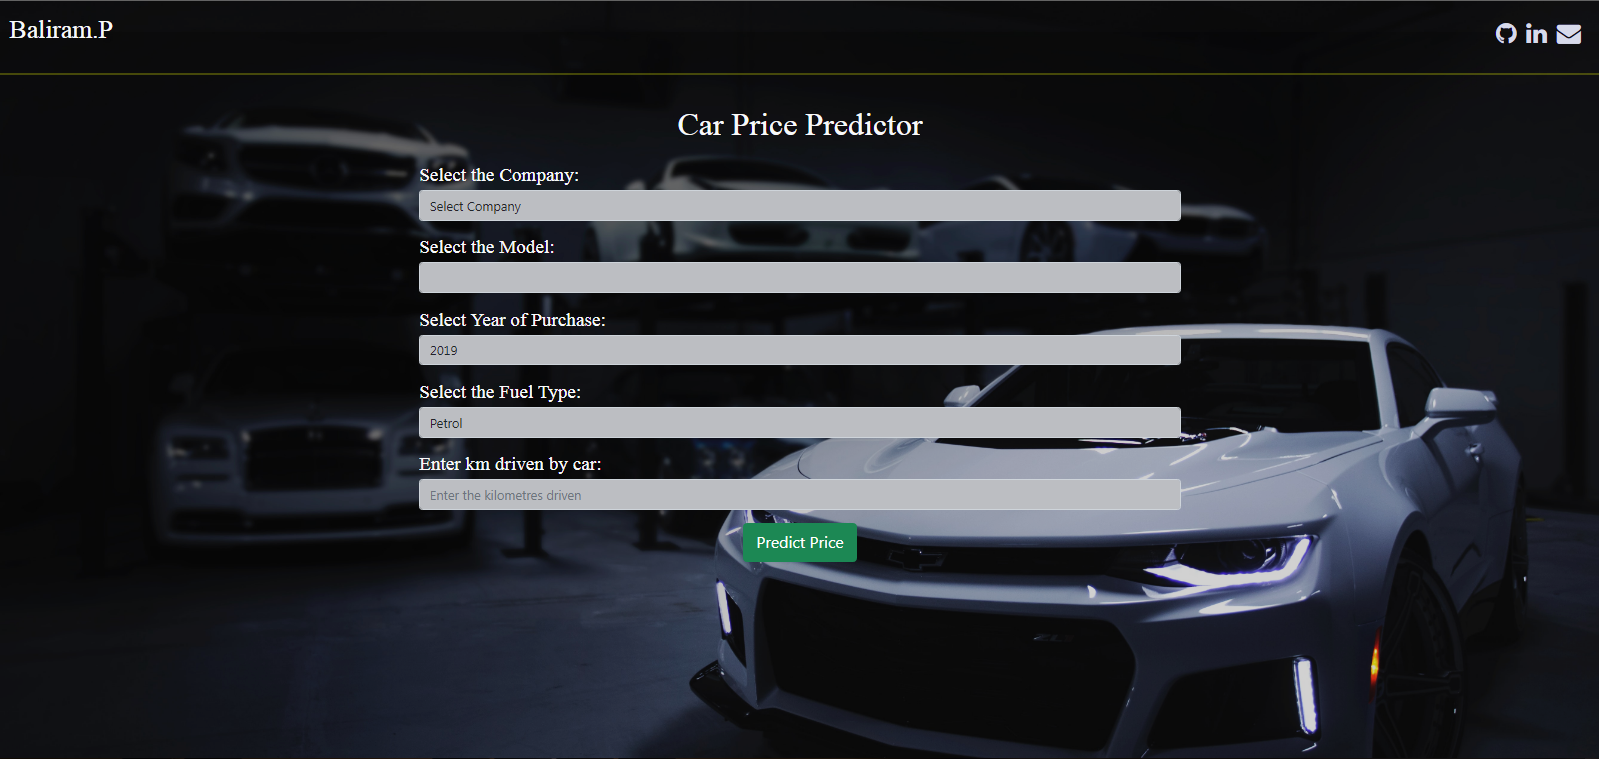 GUI of Car Price Predictor